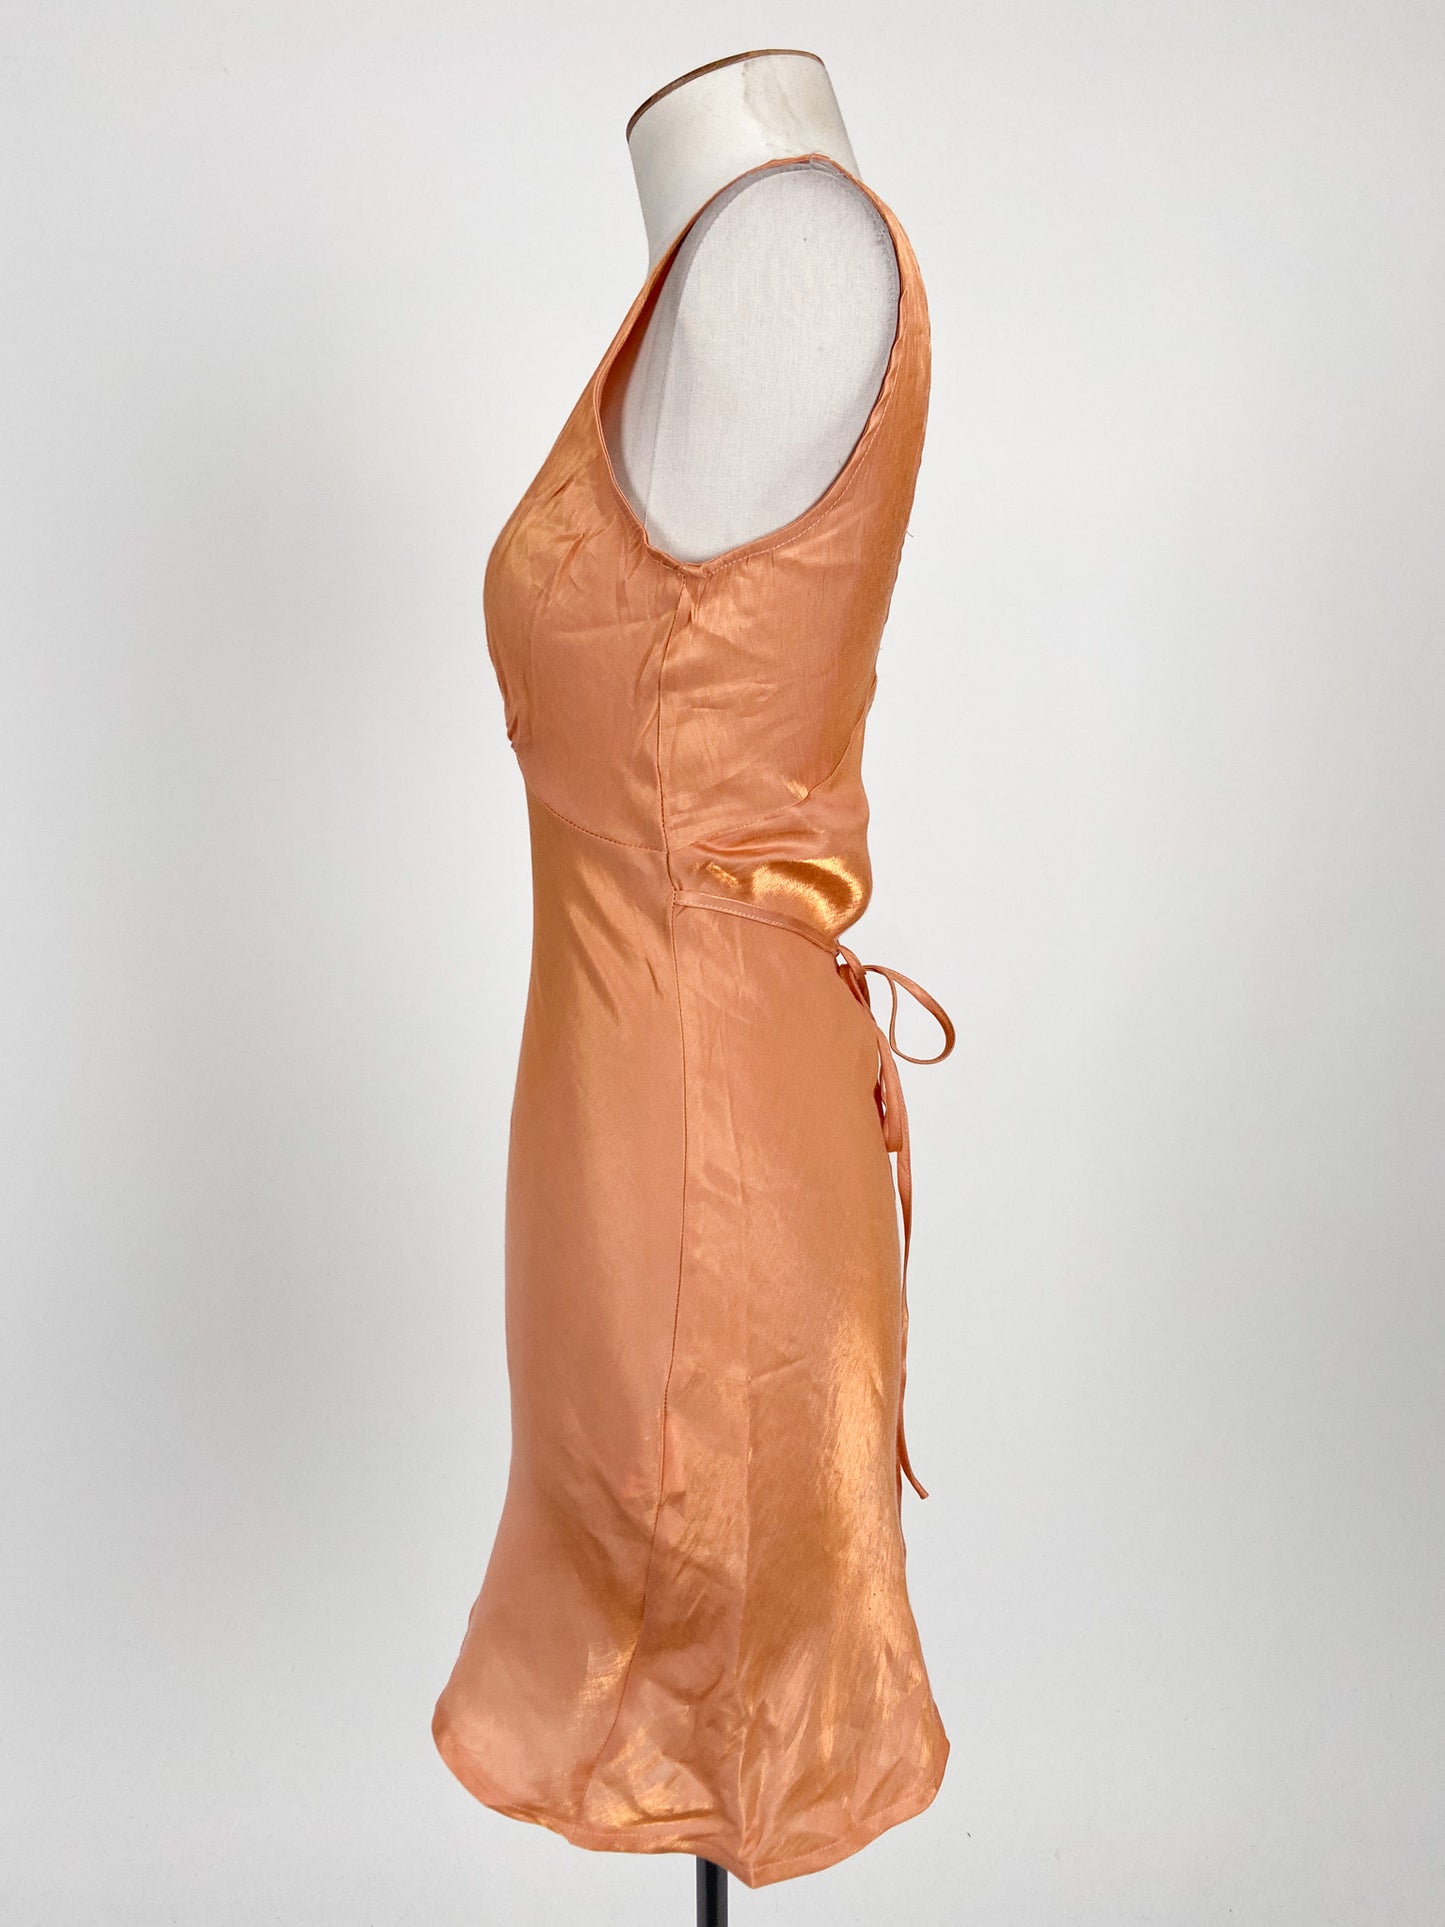 PepperMayo | Orange Cocktail Dress | Size 6